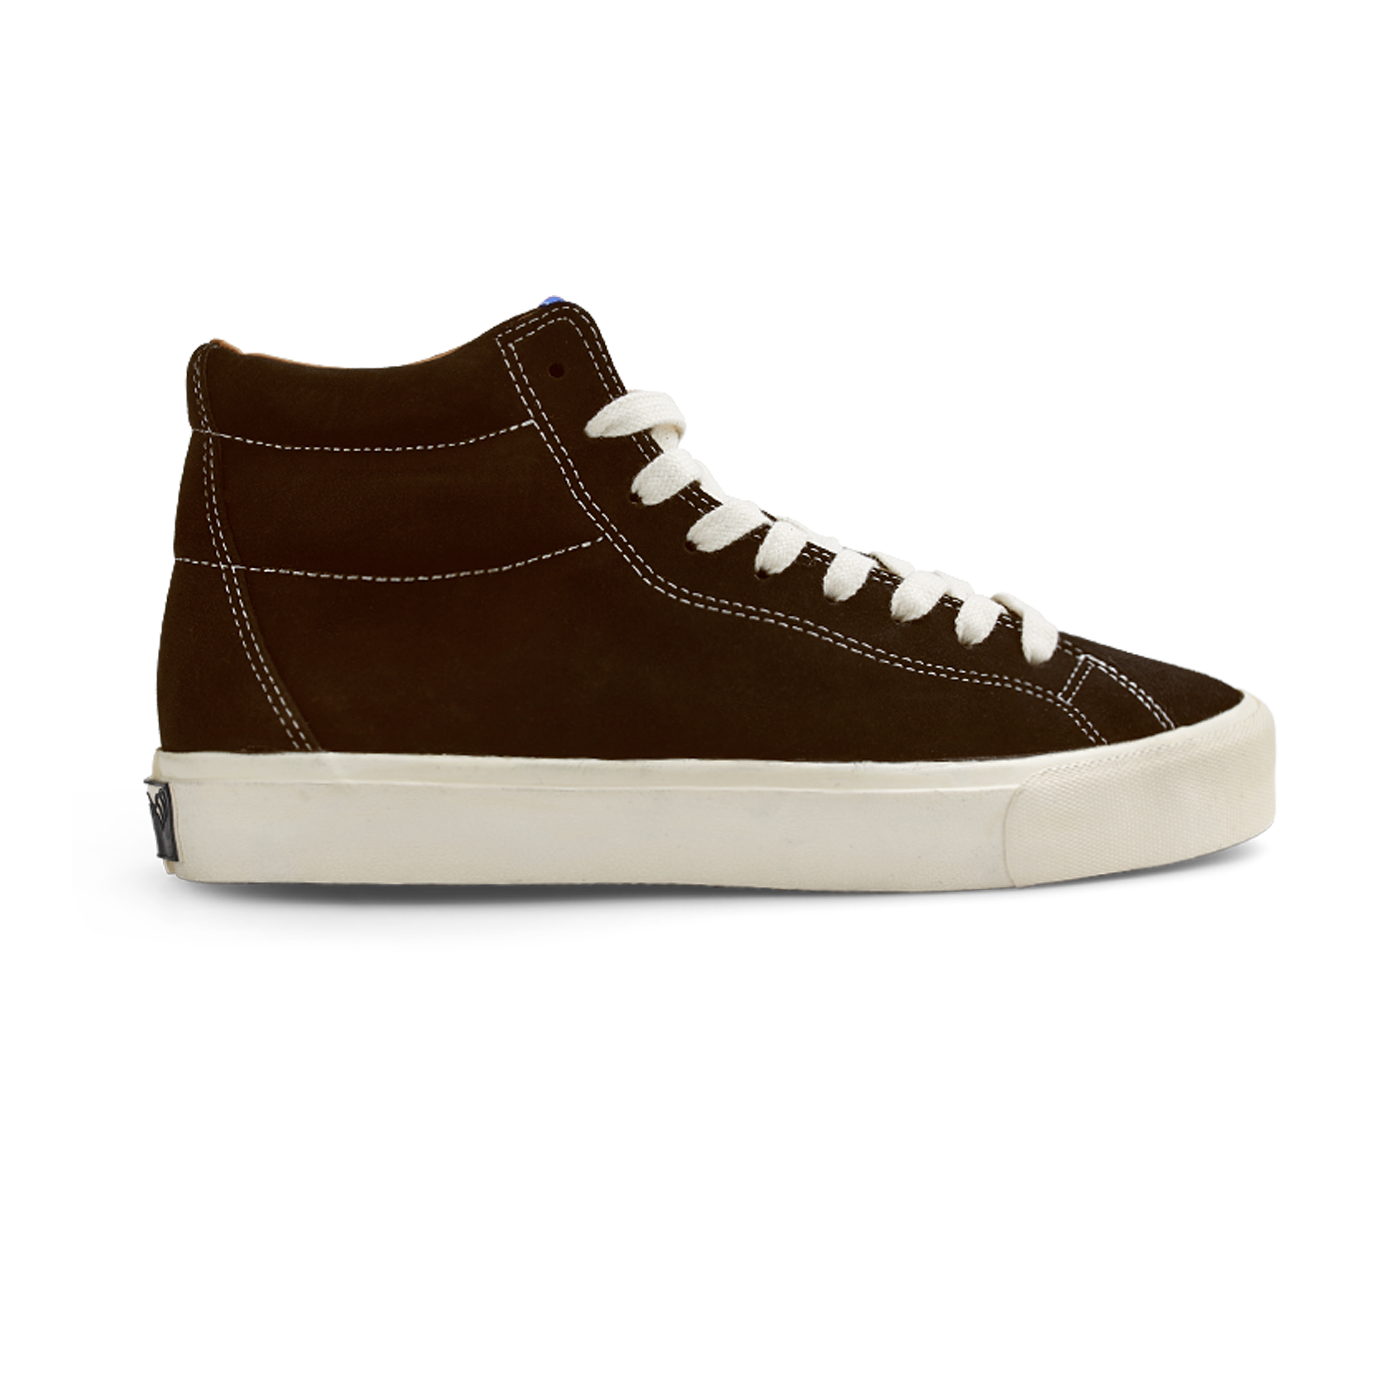 Last Resort 'VM003 Suede Hi' Skate Shoes (Chocolate Brown / White)